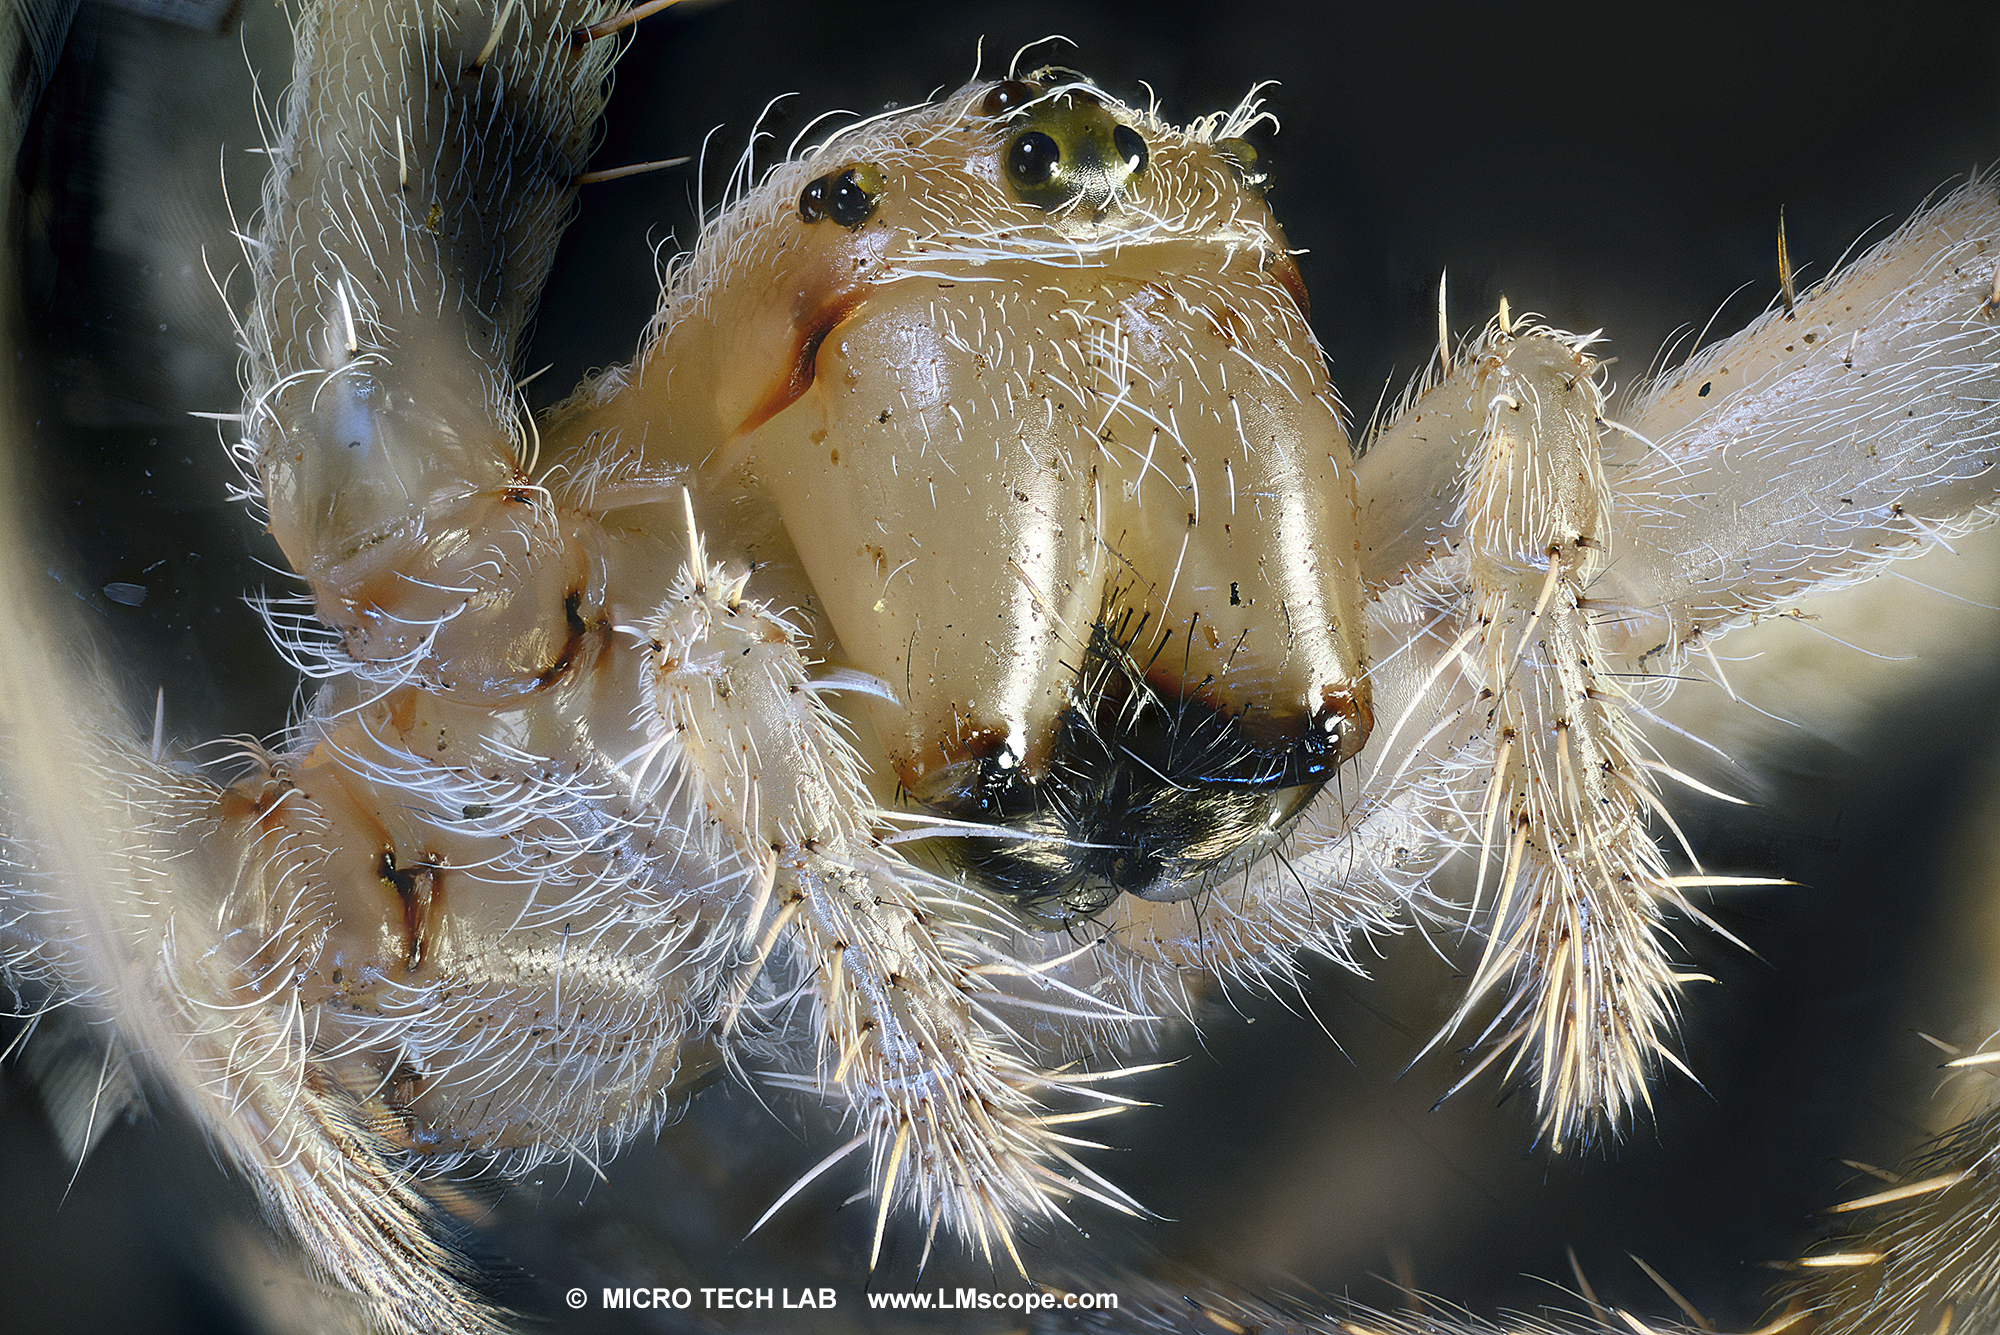 Garden spider attack (Araneus diadematus)